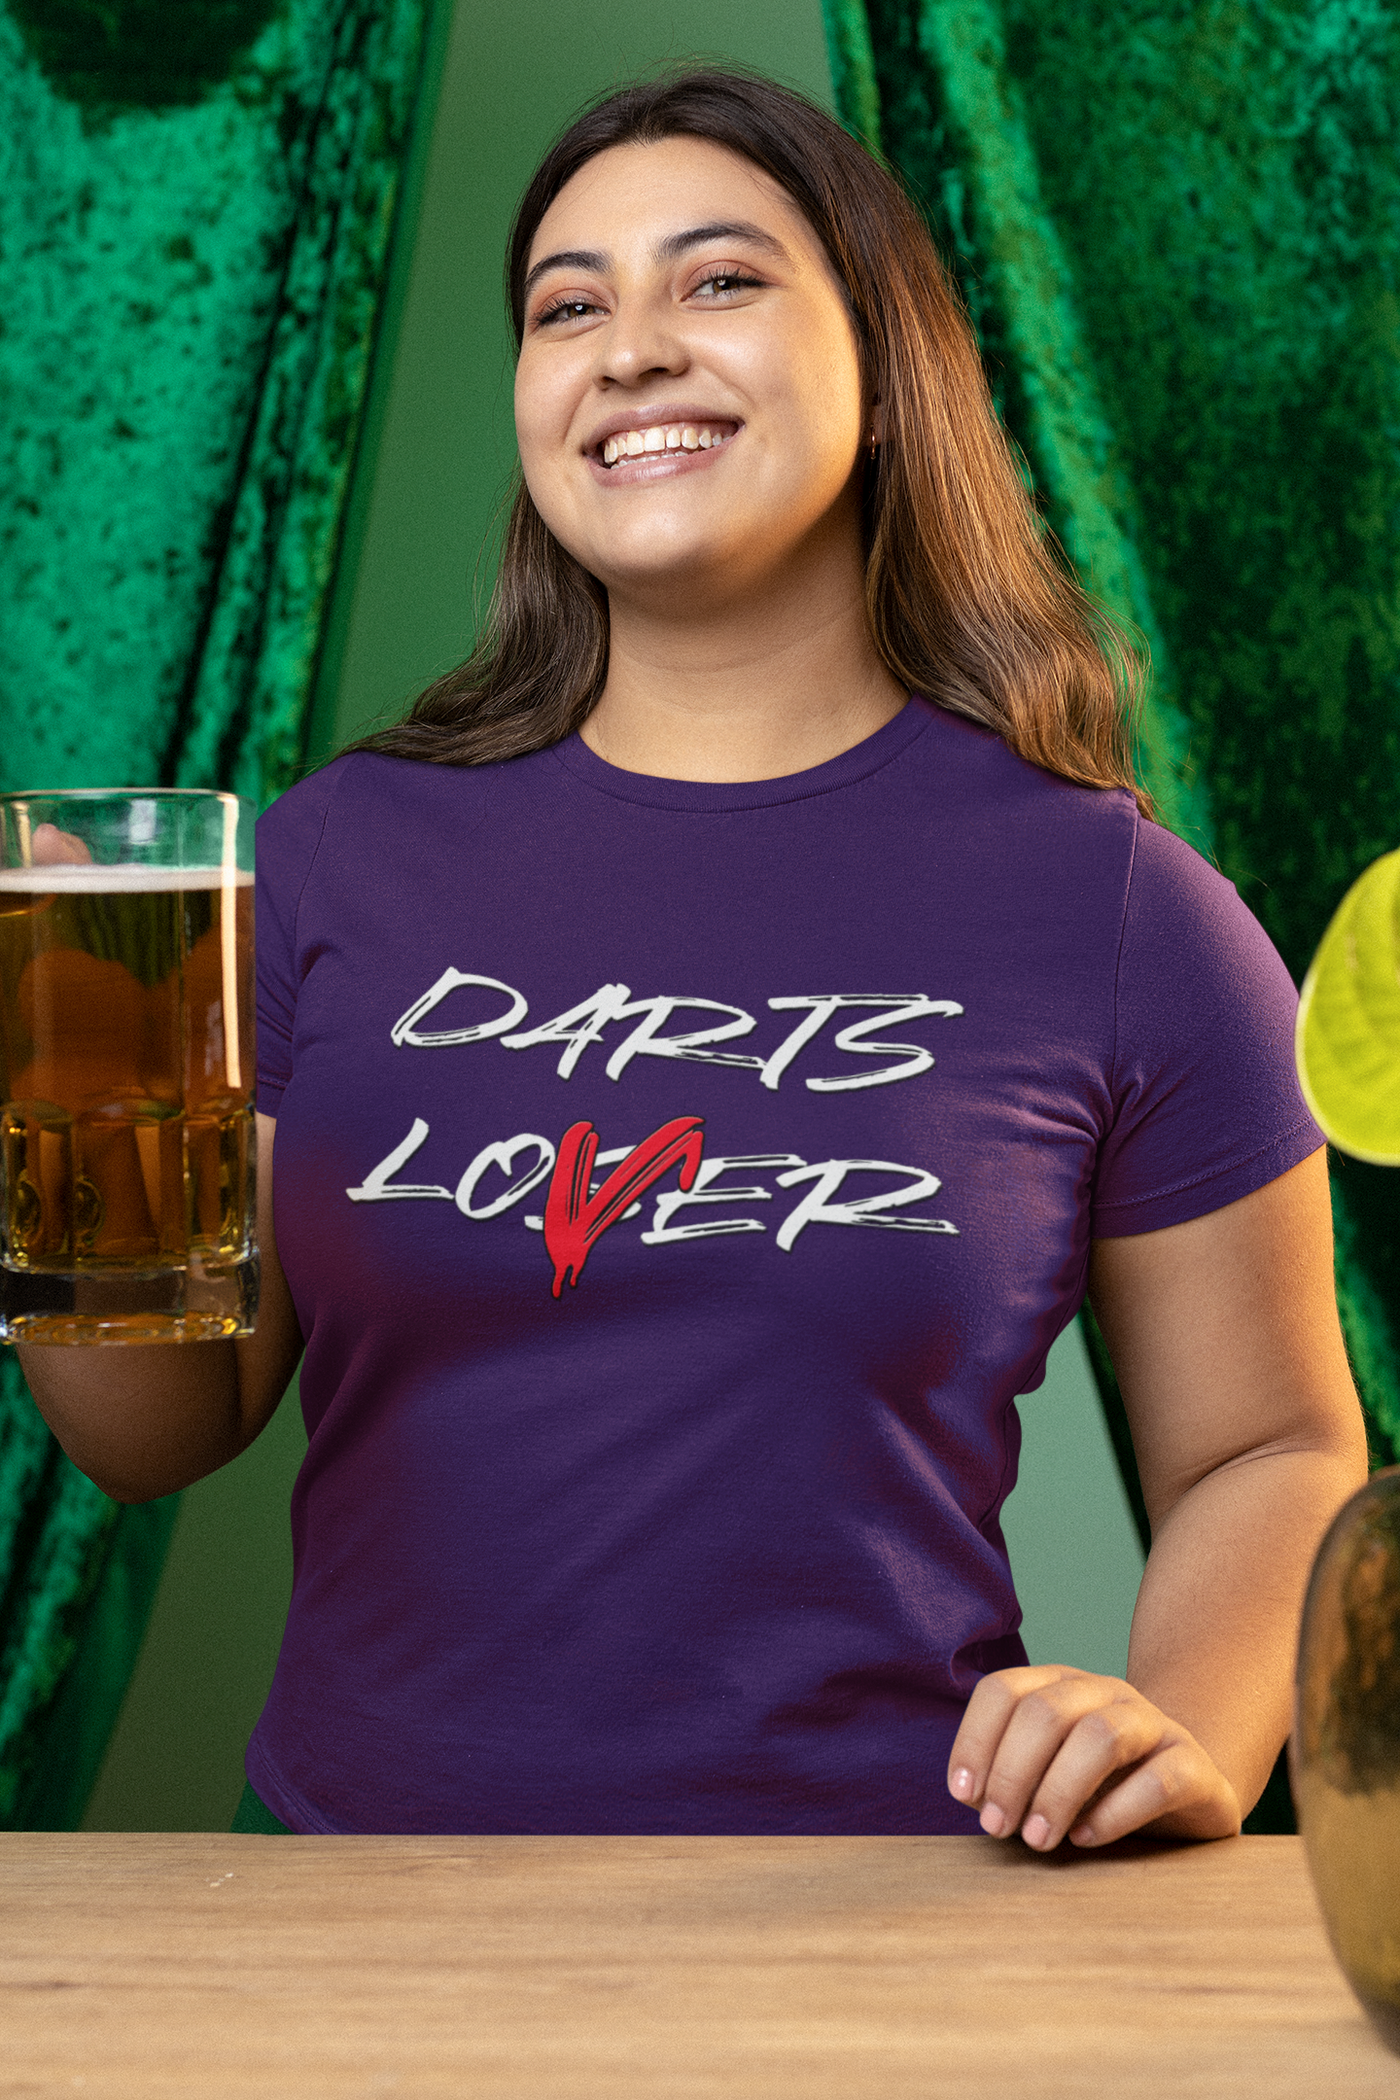 DARTS LOVER - T-Shirt